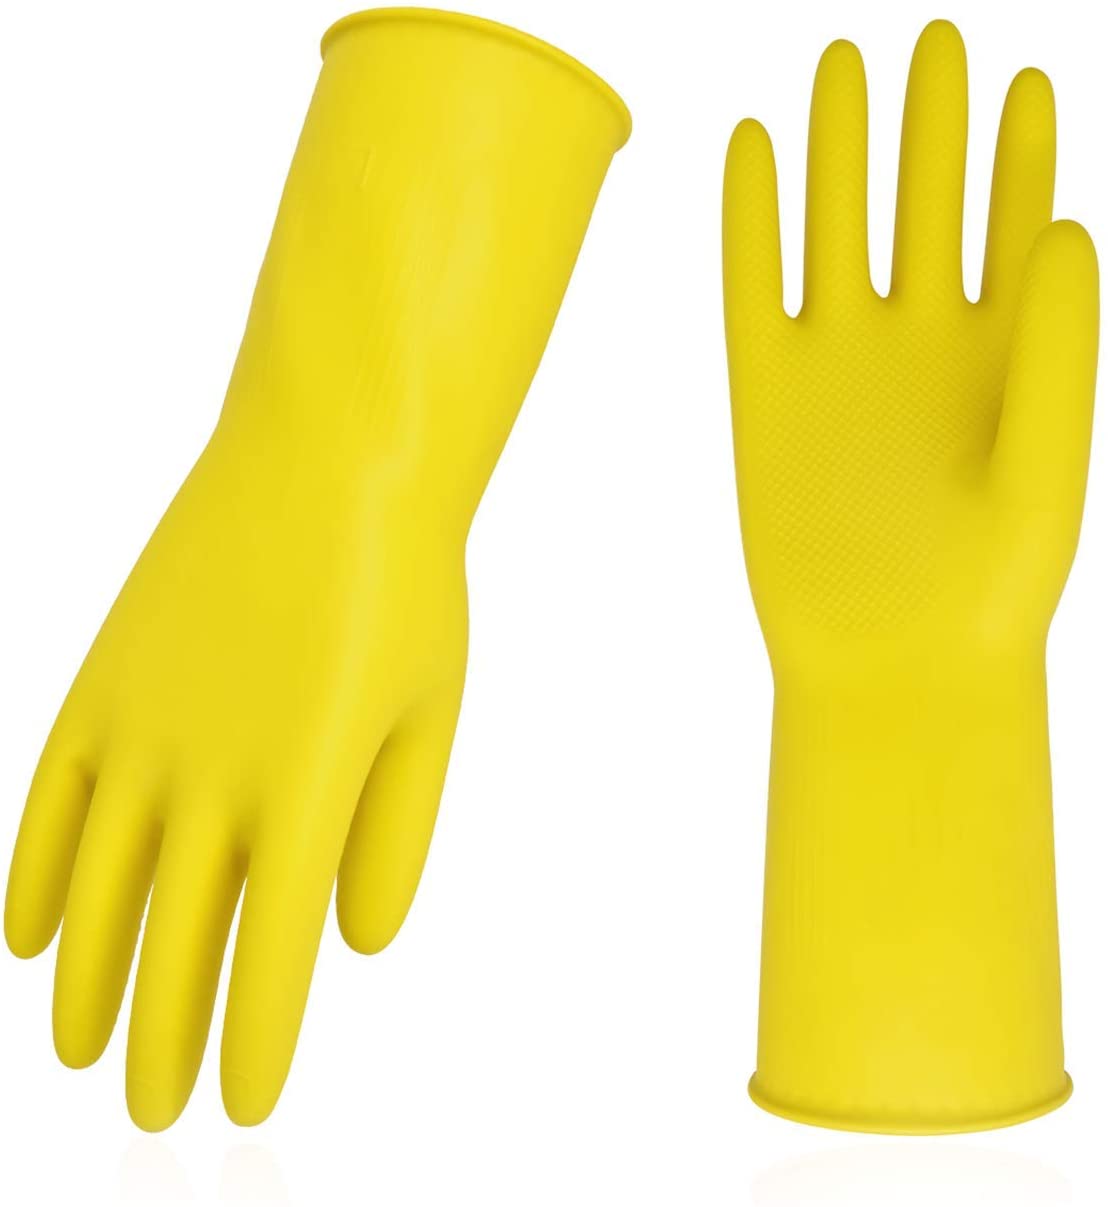 Vgo Large Reusable Dishwashing Gloves, 10-Pack